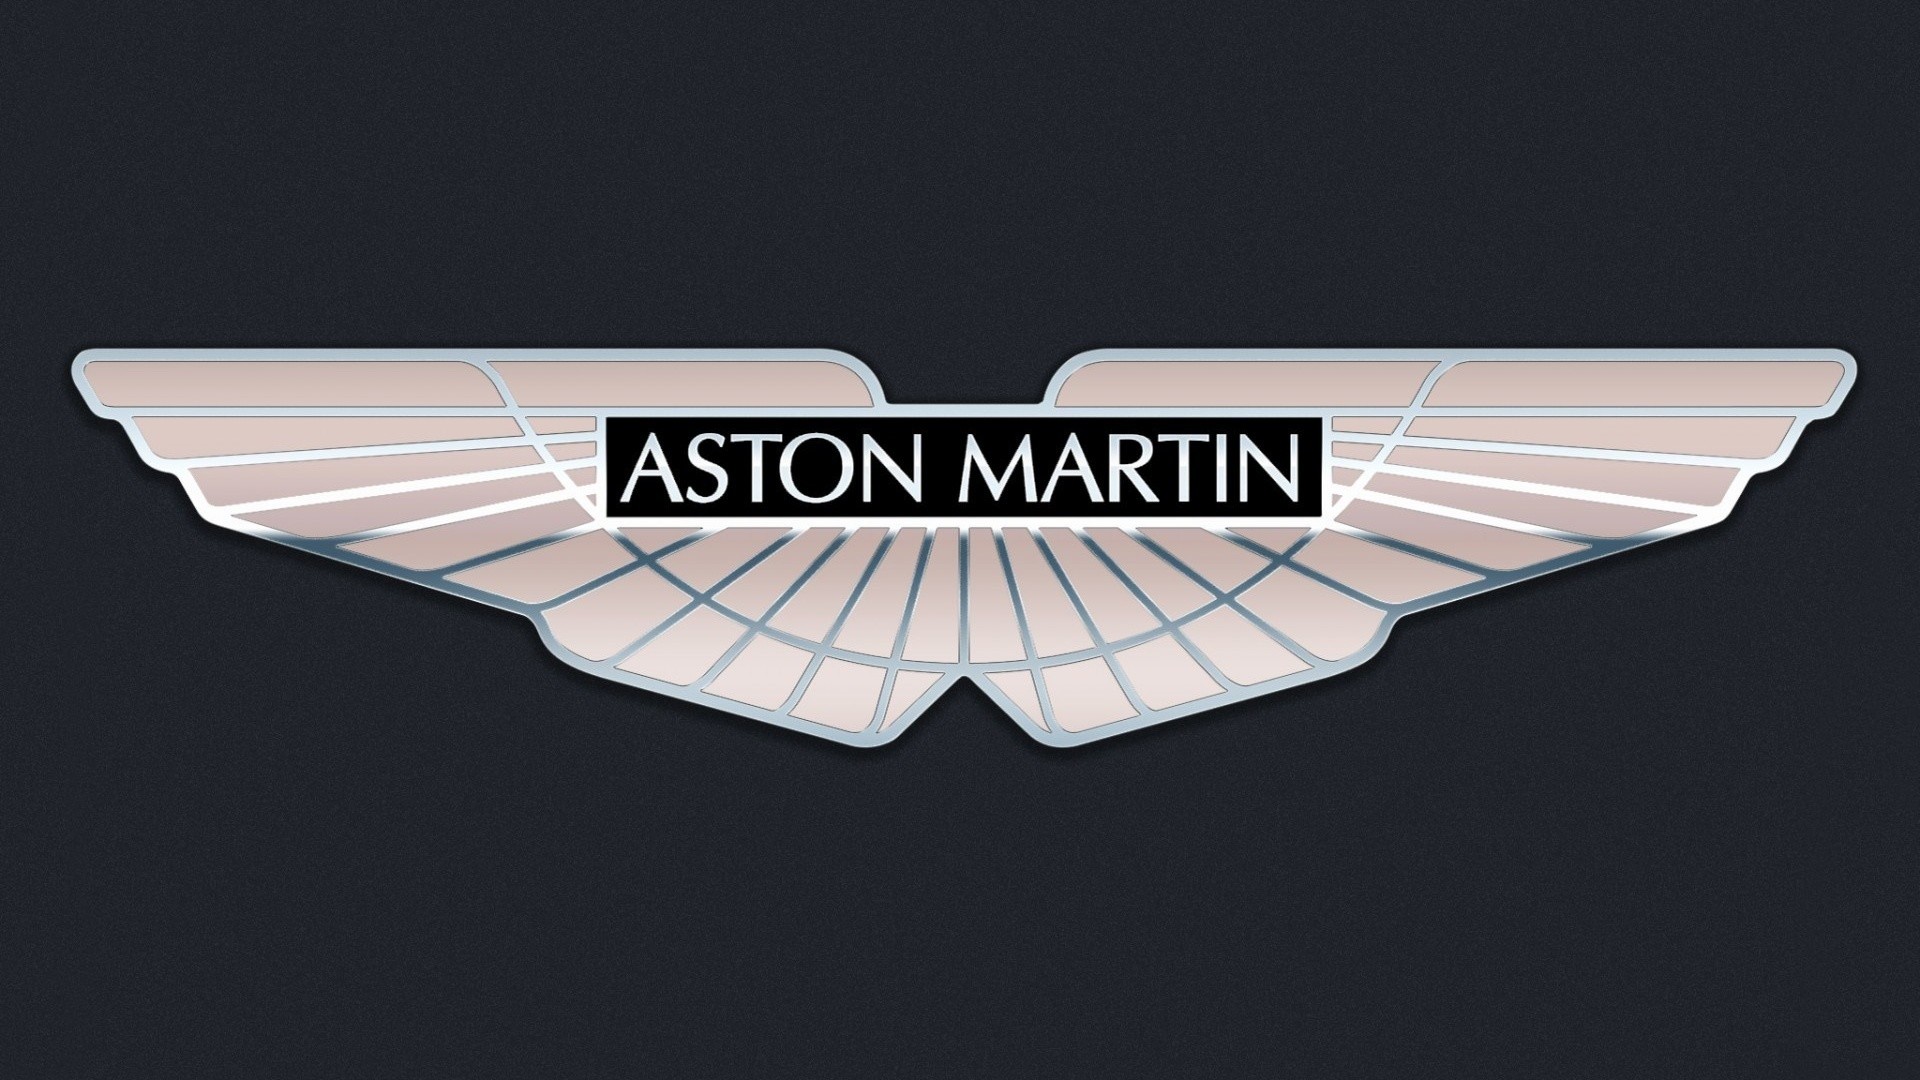 1920x1080 Aston Martin, Car, Car Brands, Aston Martin Brand, Aston Martin Logo